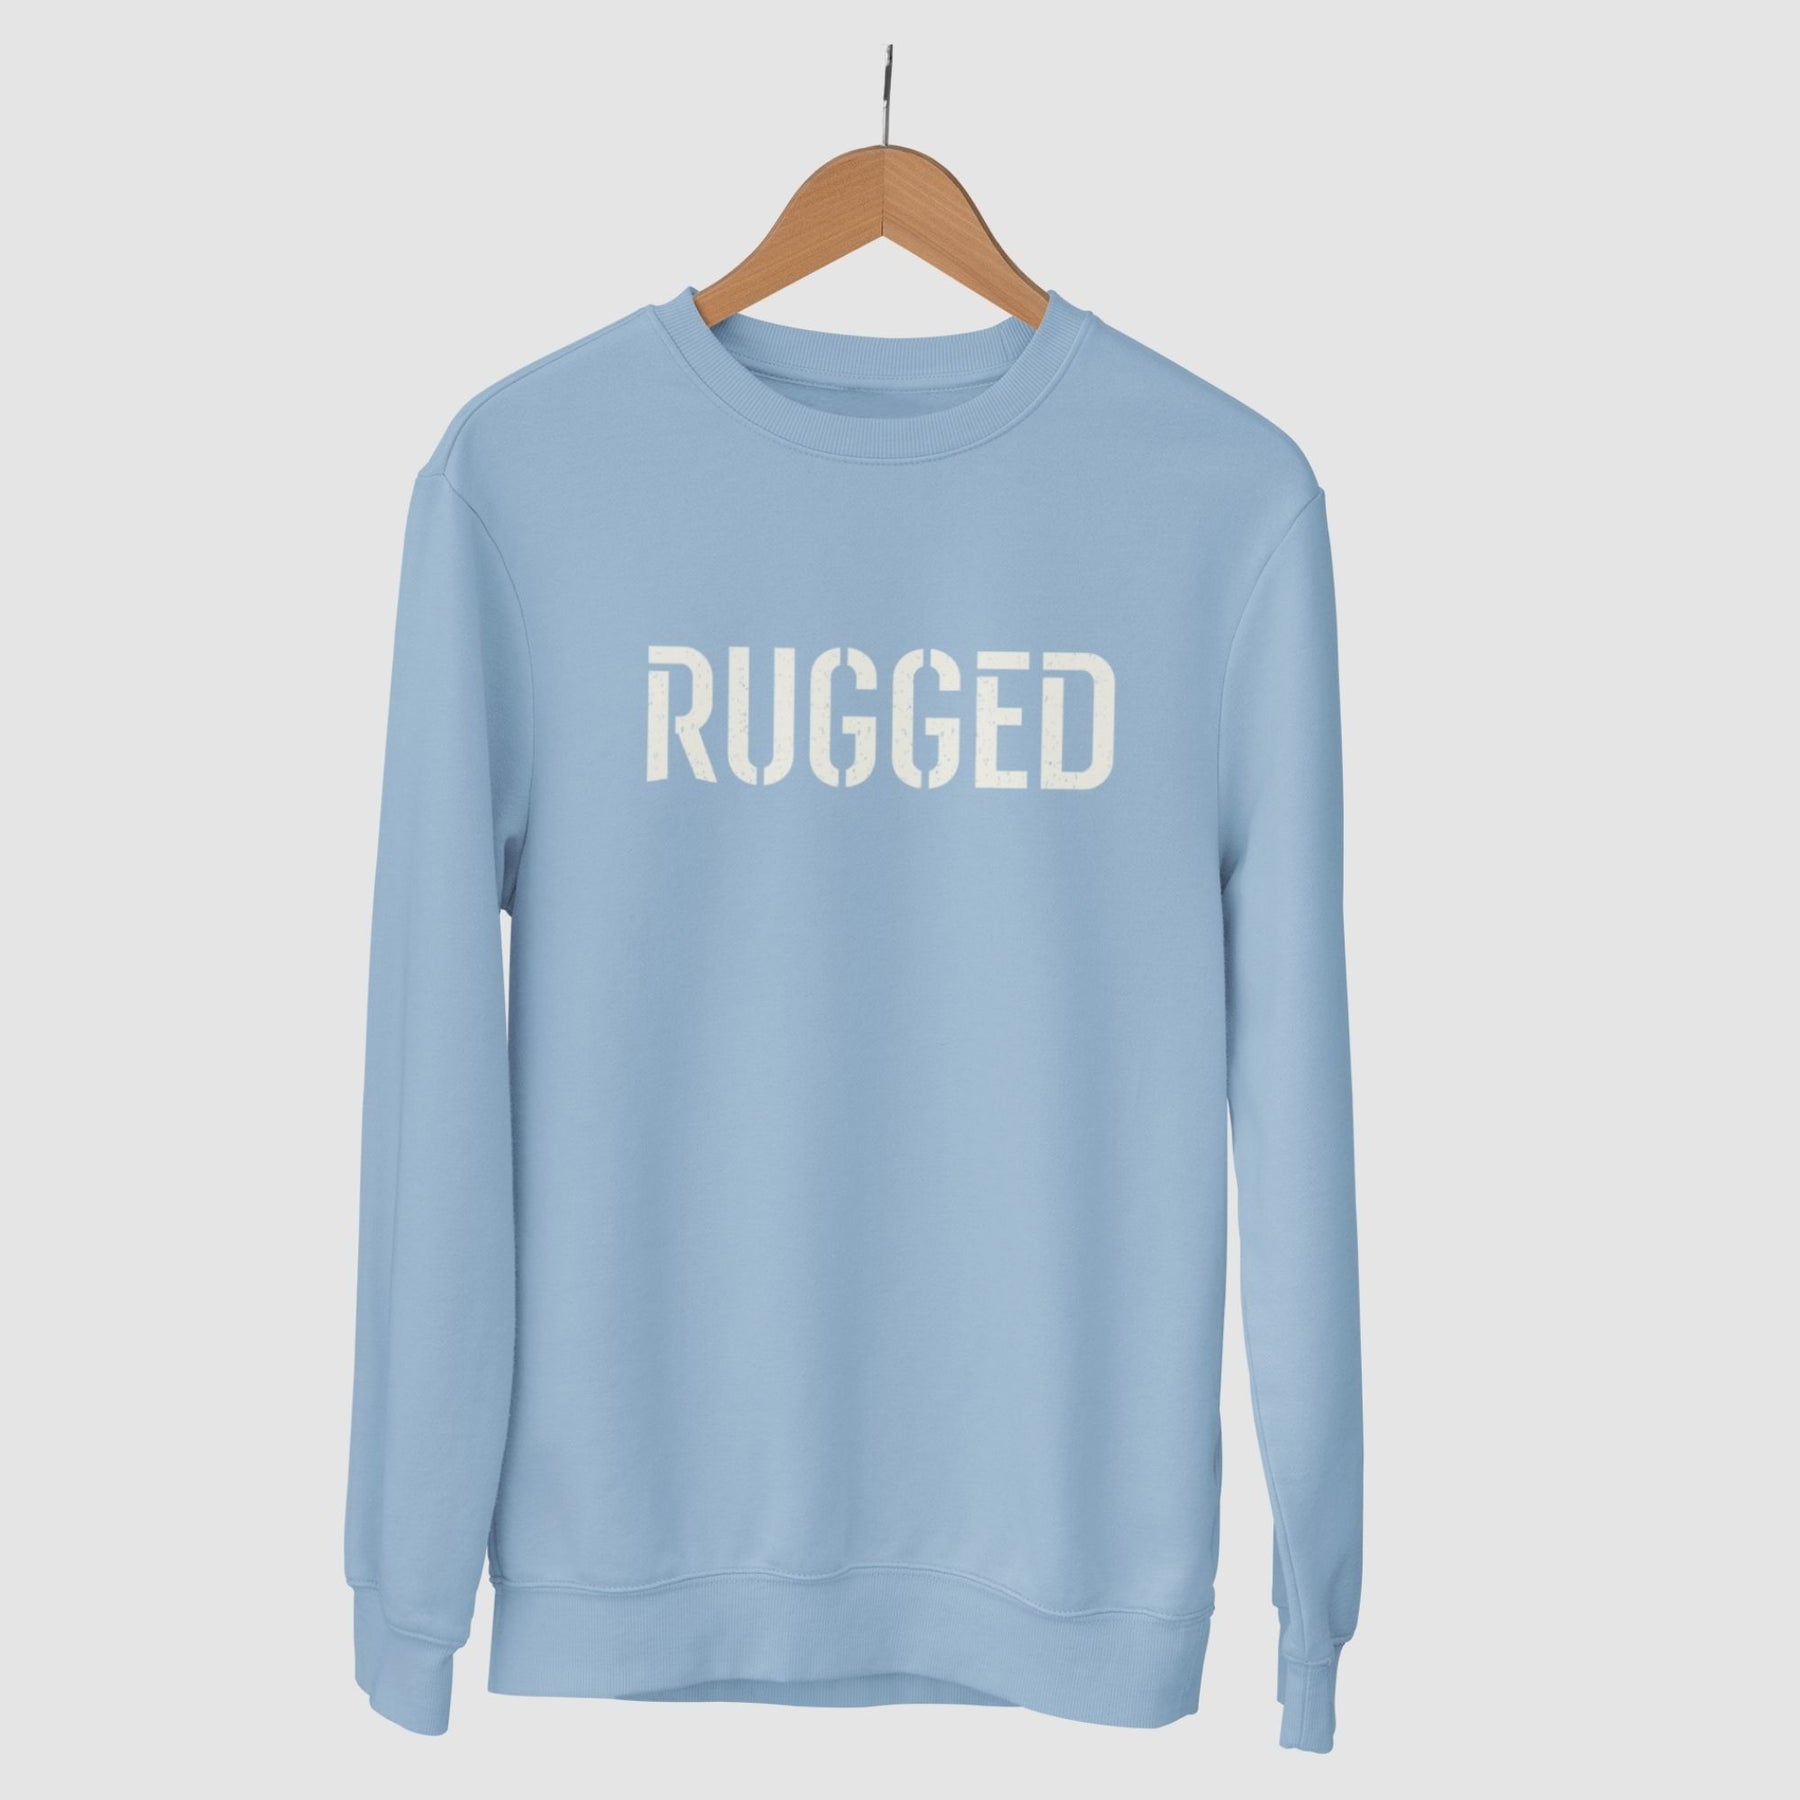 rugged-cotton-printed-unisex-light-blue-sweatshirt-gogirgit-com